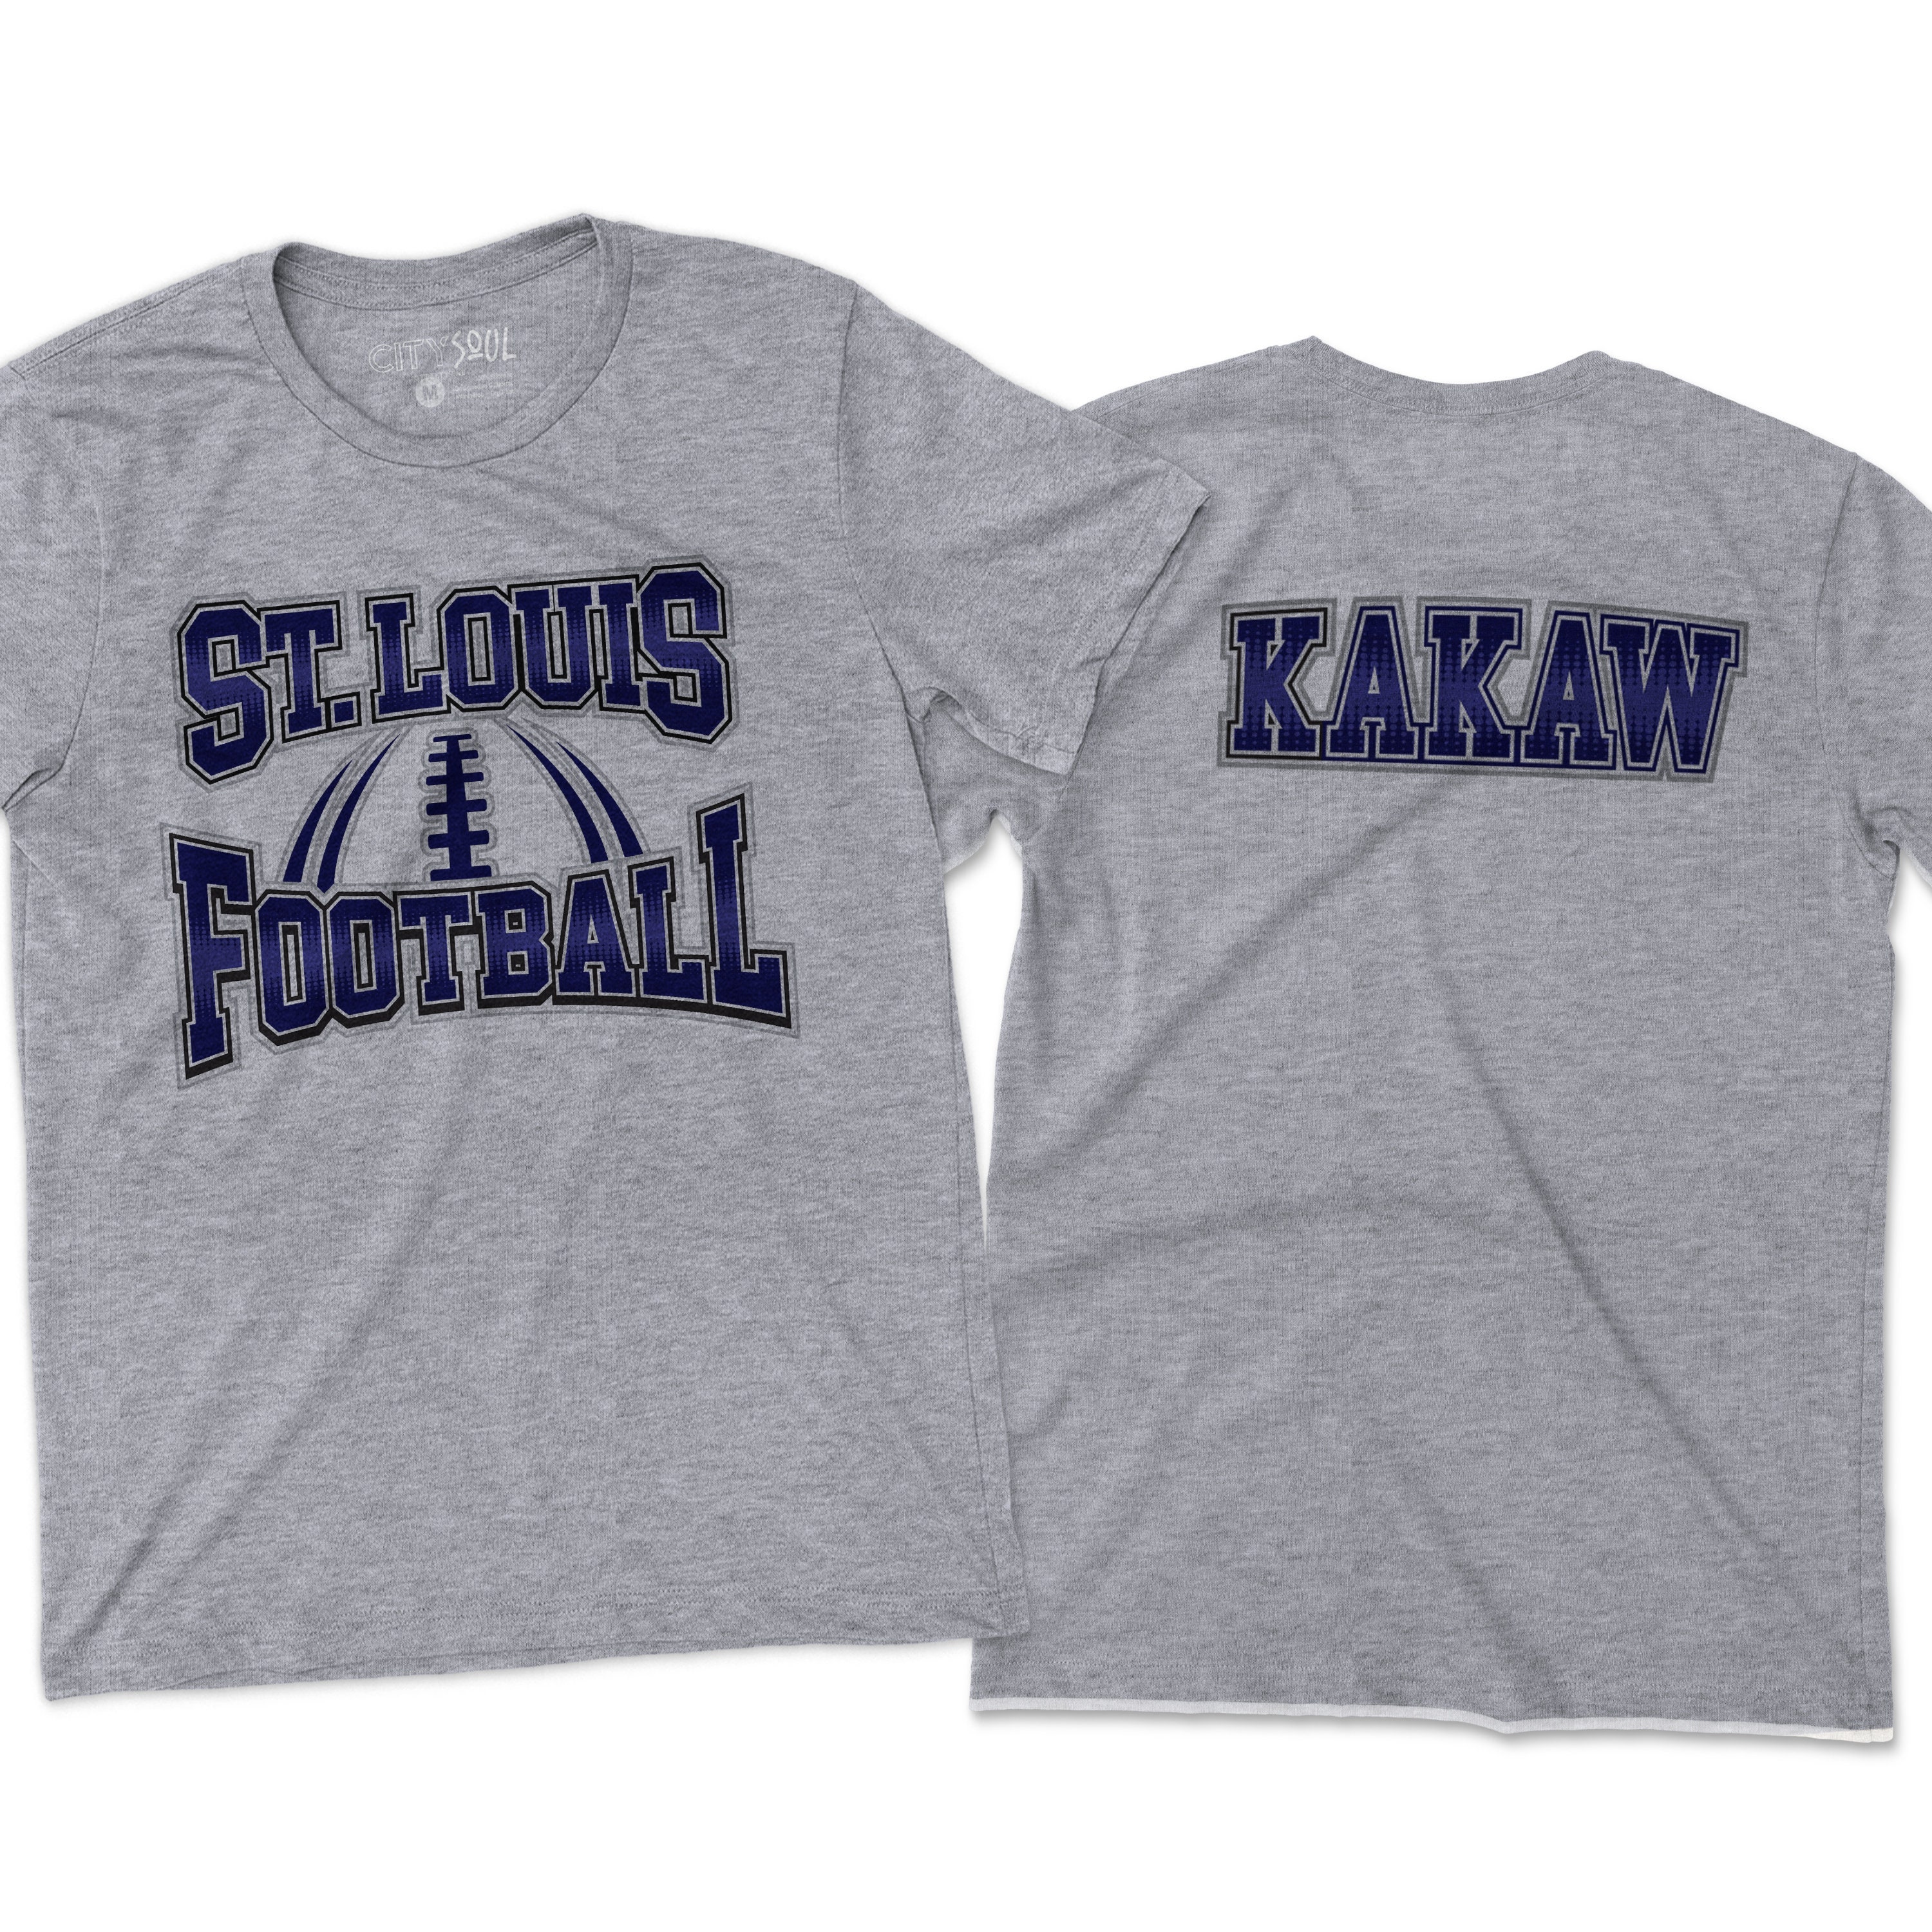 St. Louis Football Shirt Kakaw St. Louis Football T-shirt -  Israel